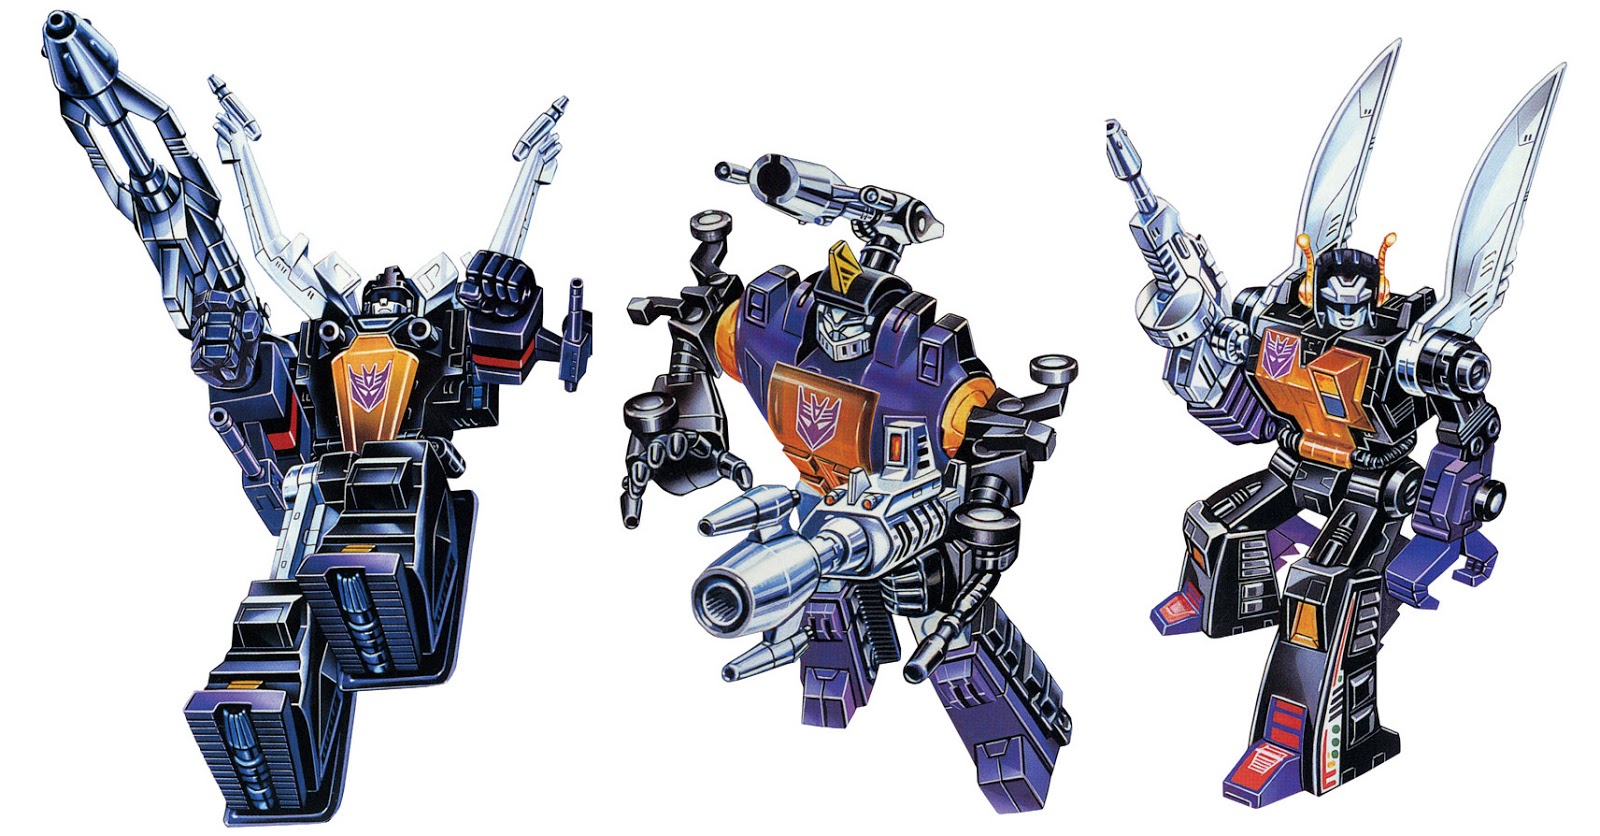 Transformer edition. Transformers g1 Инсектиконы. Insecticons Transformers g1. Инсинтиконы трансформеры g1. Шрапнель трансформеры g1.